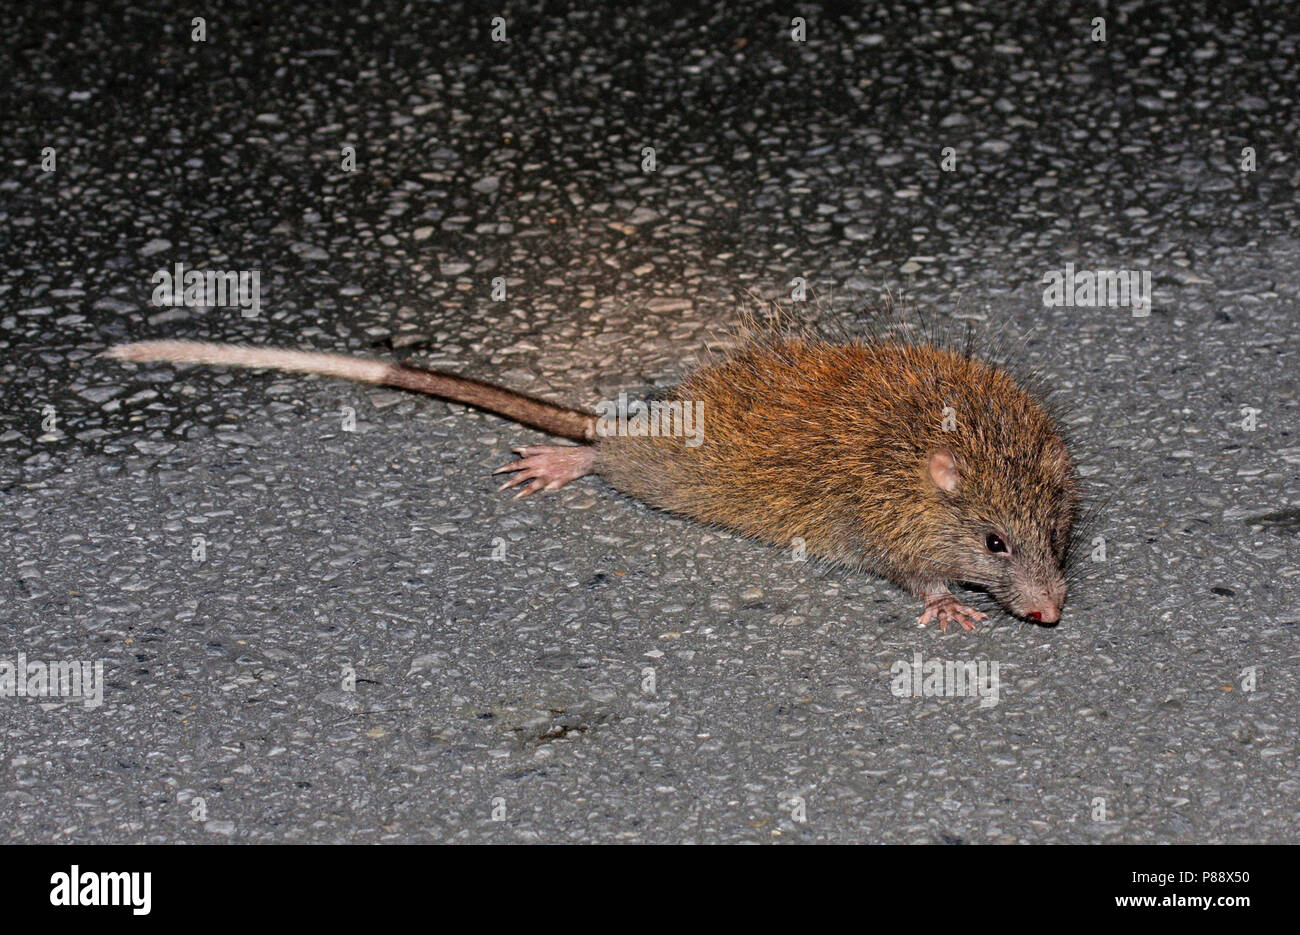 Ryukyu di ratto, Ryukyu lunga coda di ratto gigante Foto Stock